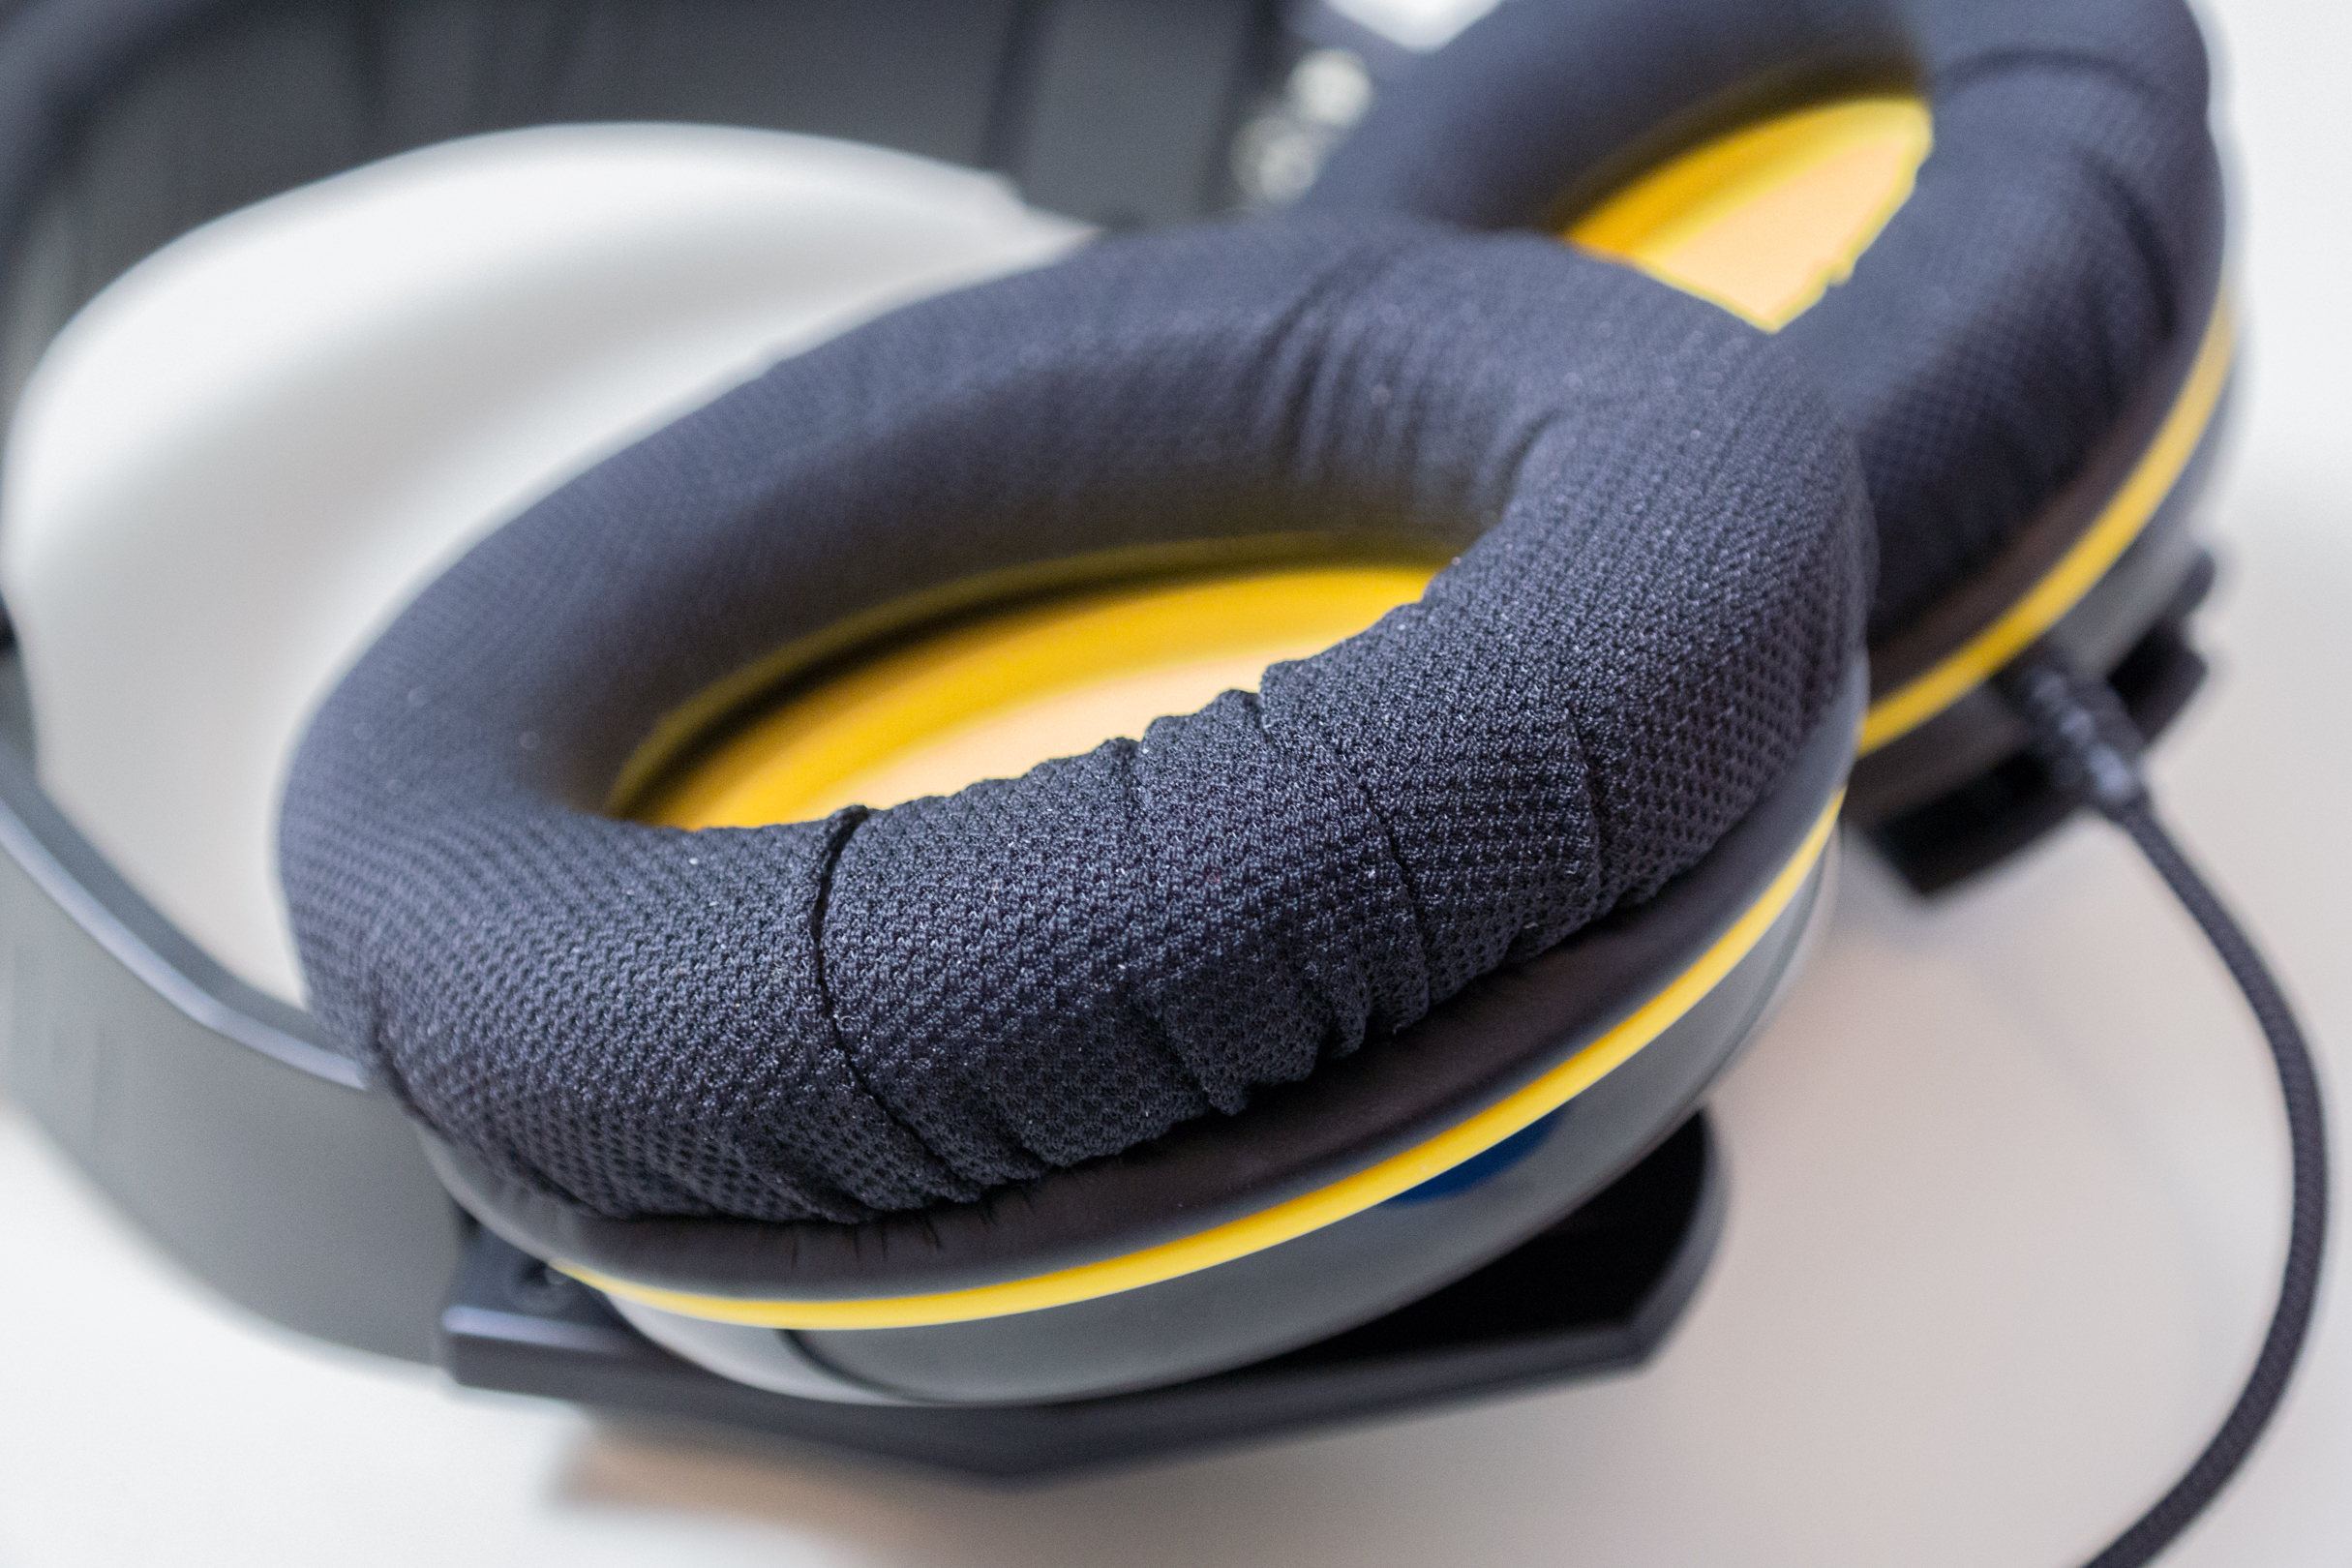 Corsair H1500 headset features sound, comfort